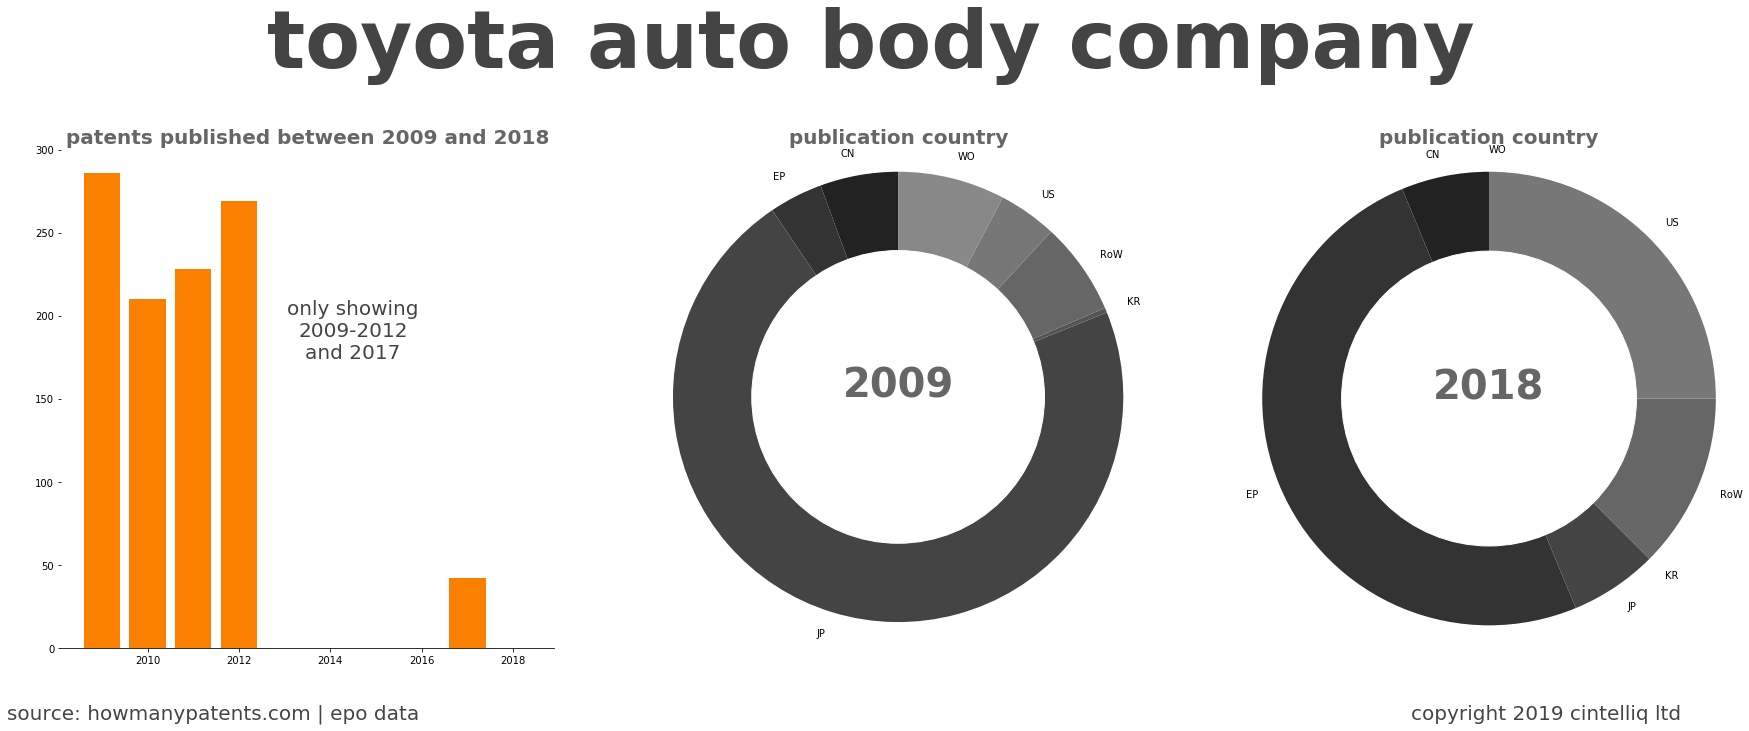 summary of patents for Toyota Auto Body Company